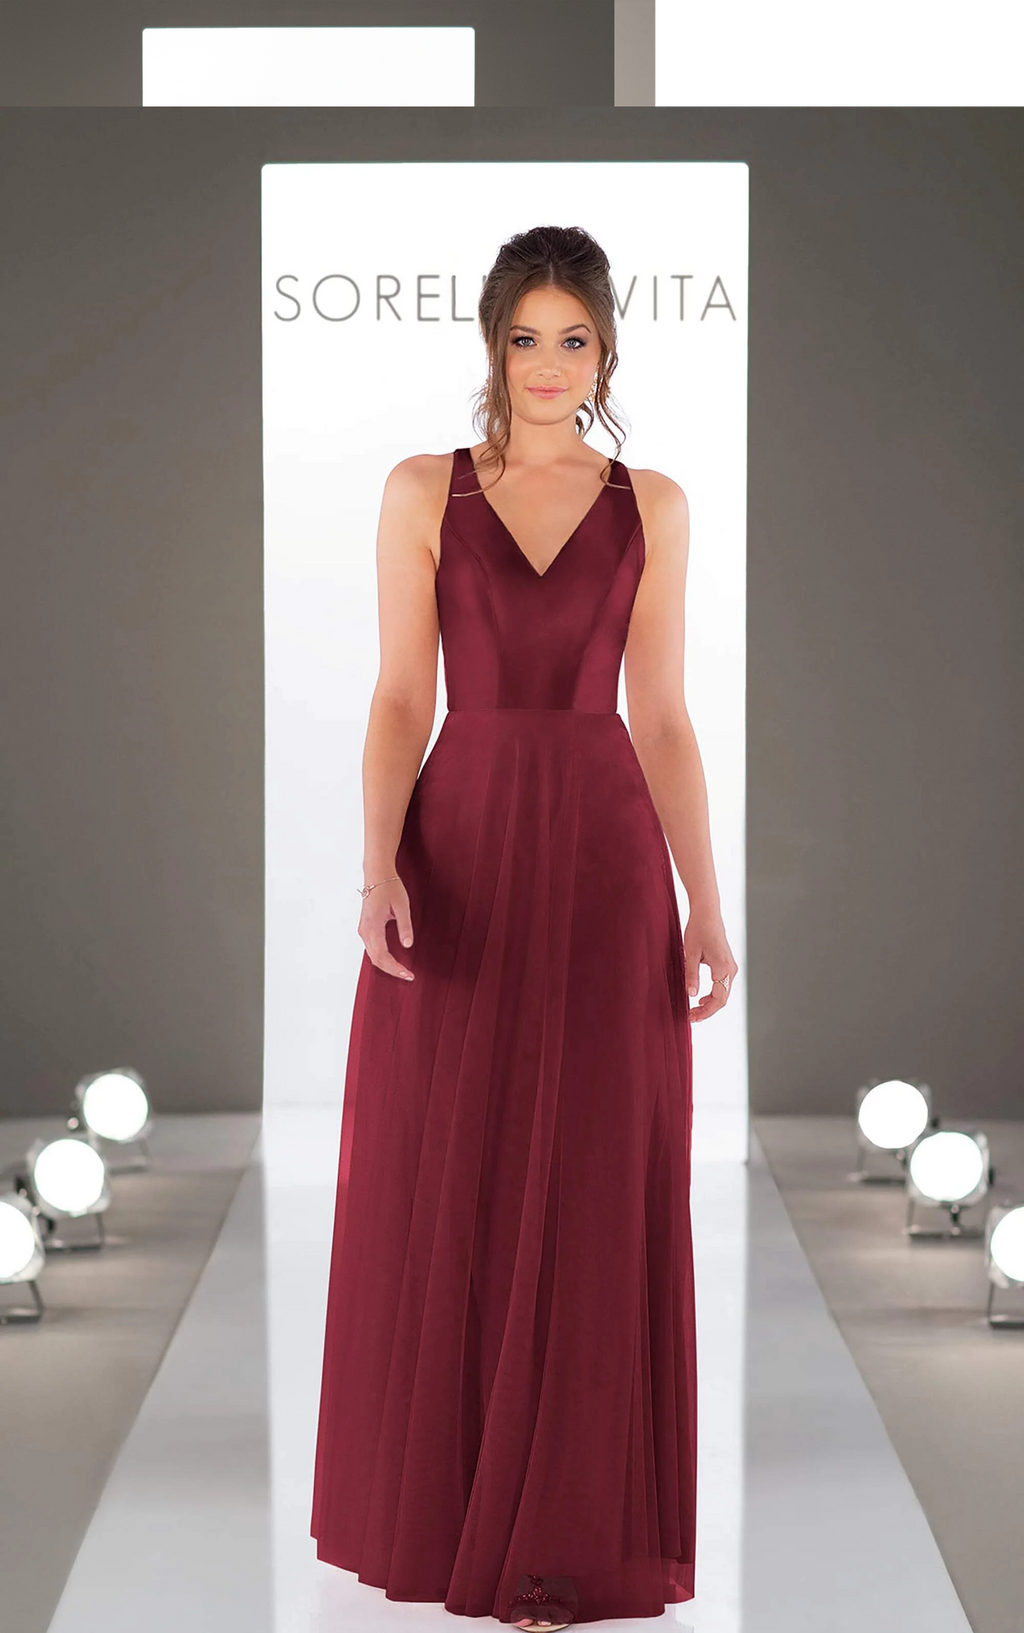 Sorella Vita Dress Style 9170 (Merlot-Size 12) Prom, Ball., Black-tie, Bridesmaid, Pageant